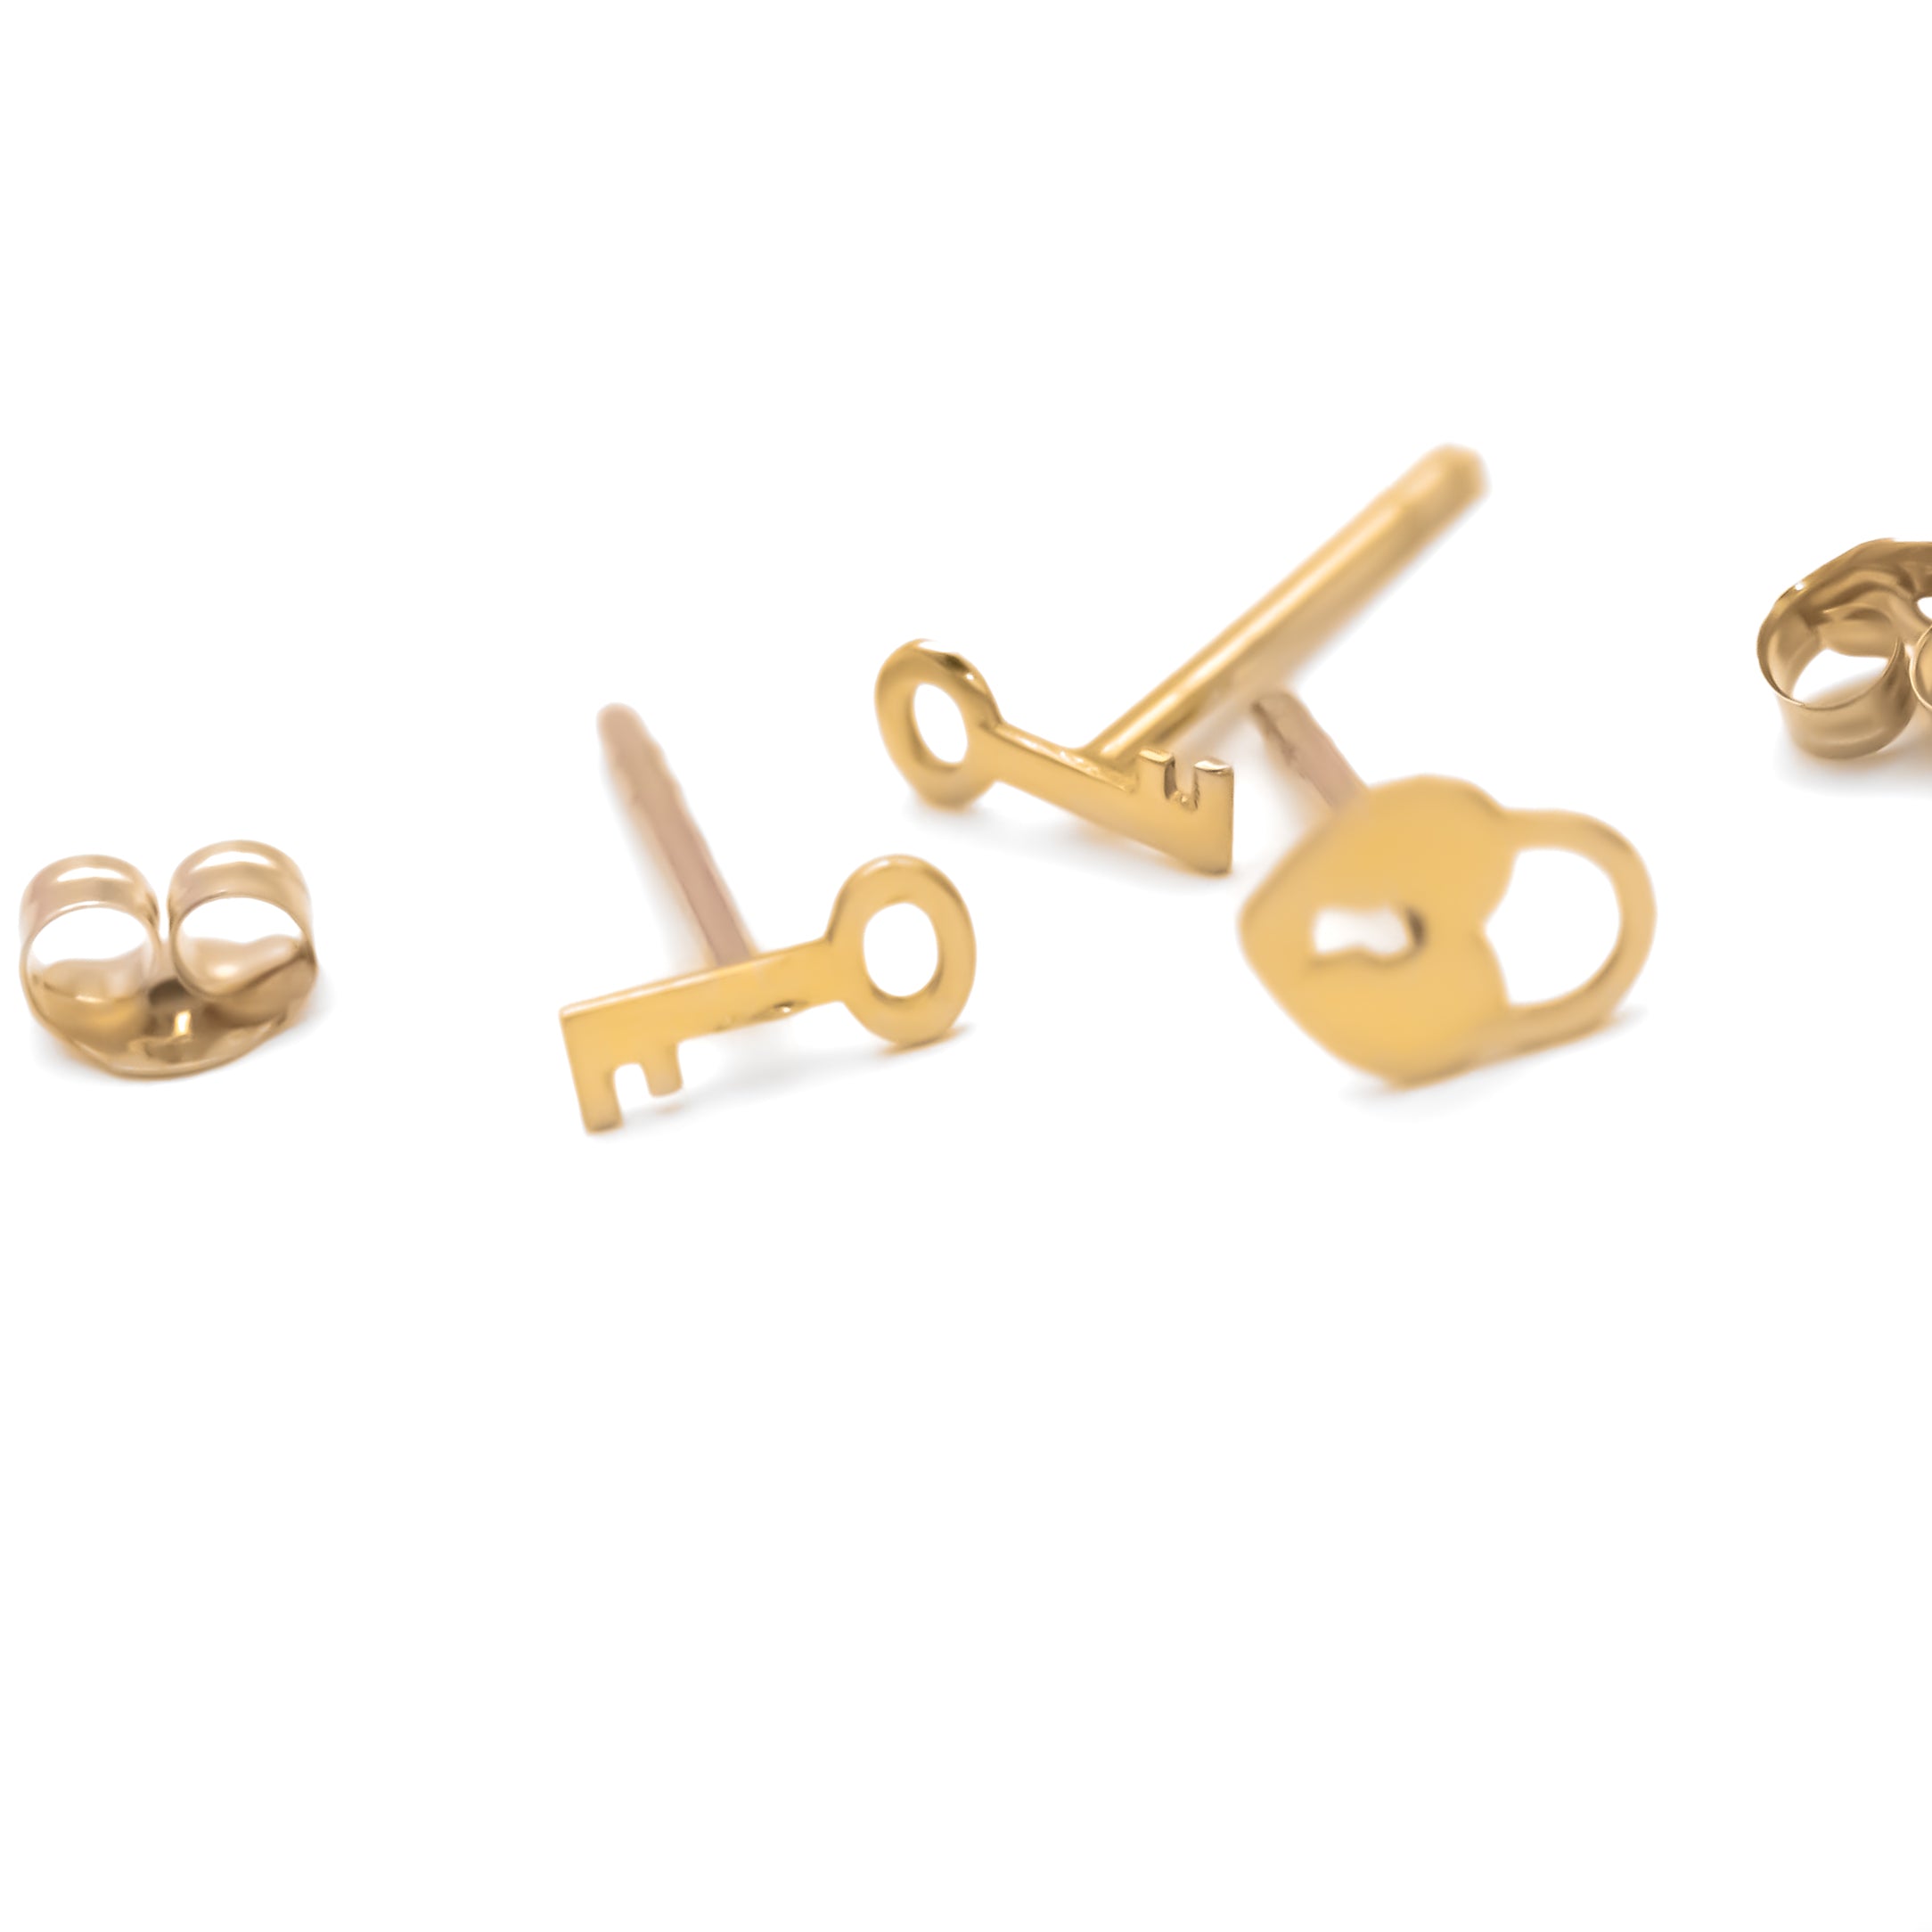 14k-gold-tiny-key-or-heart-lock-earring-studs-morseanddainty-com-1.jpg